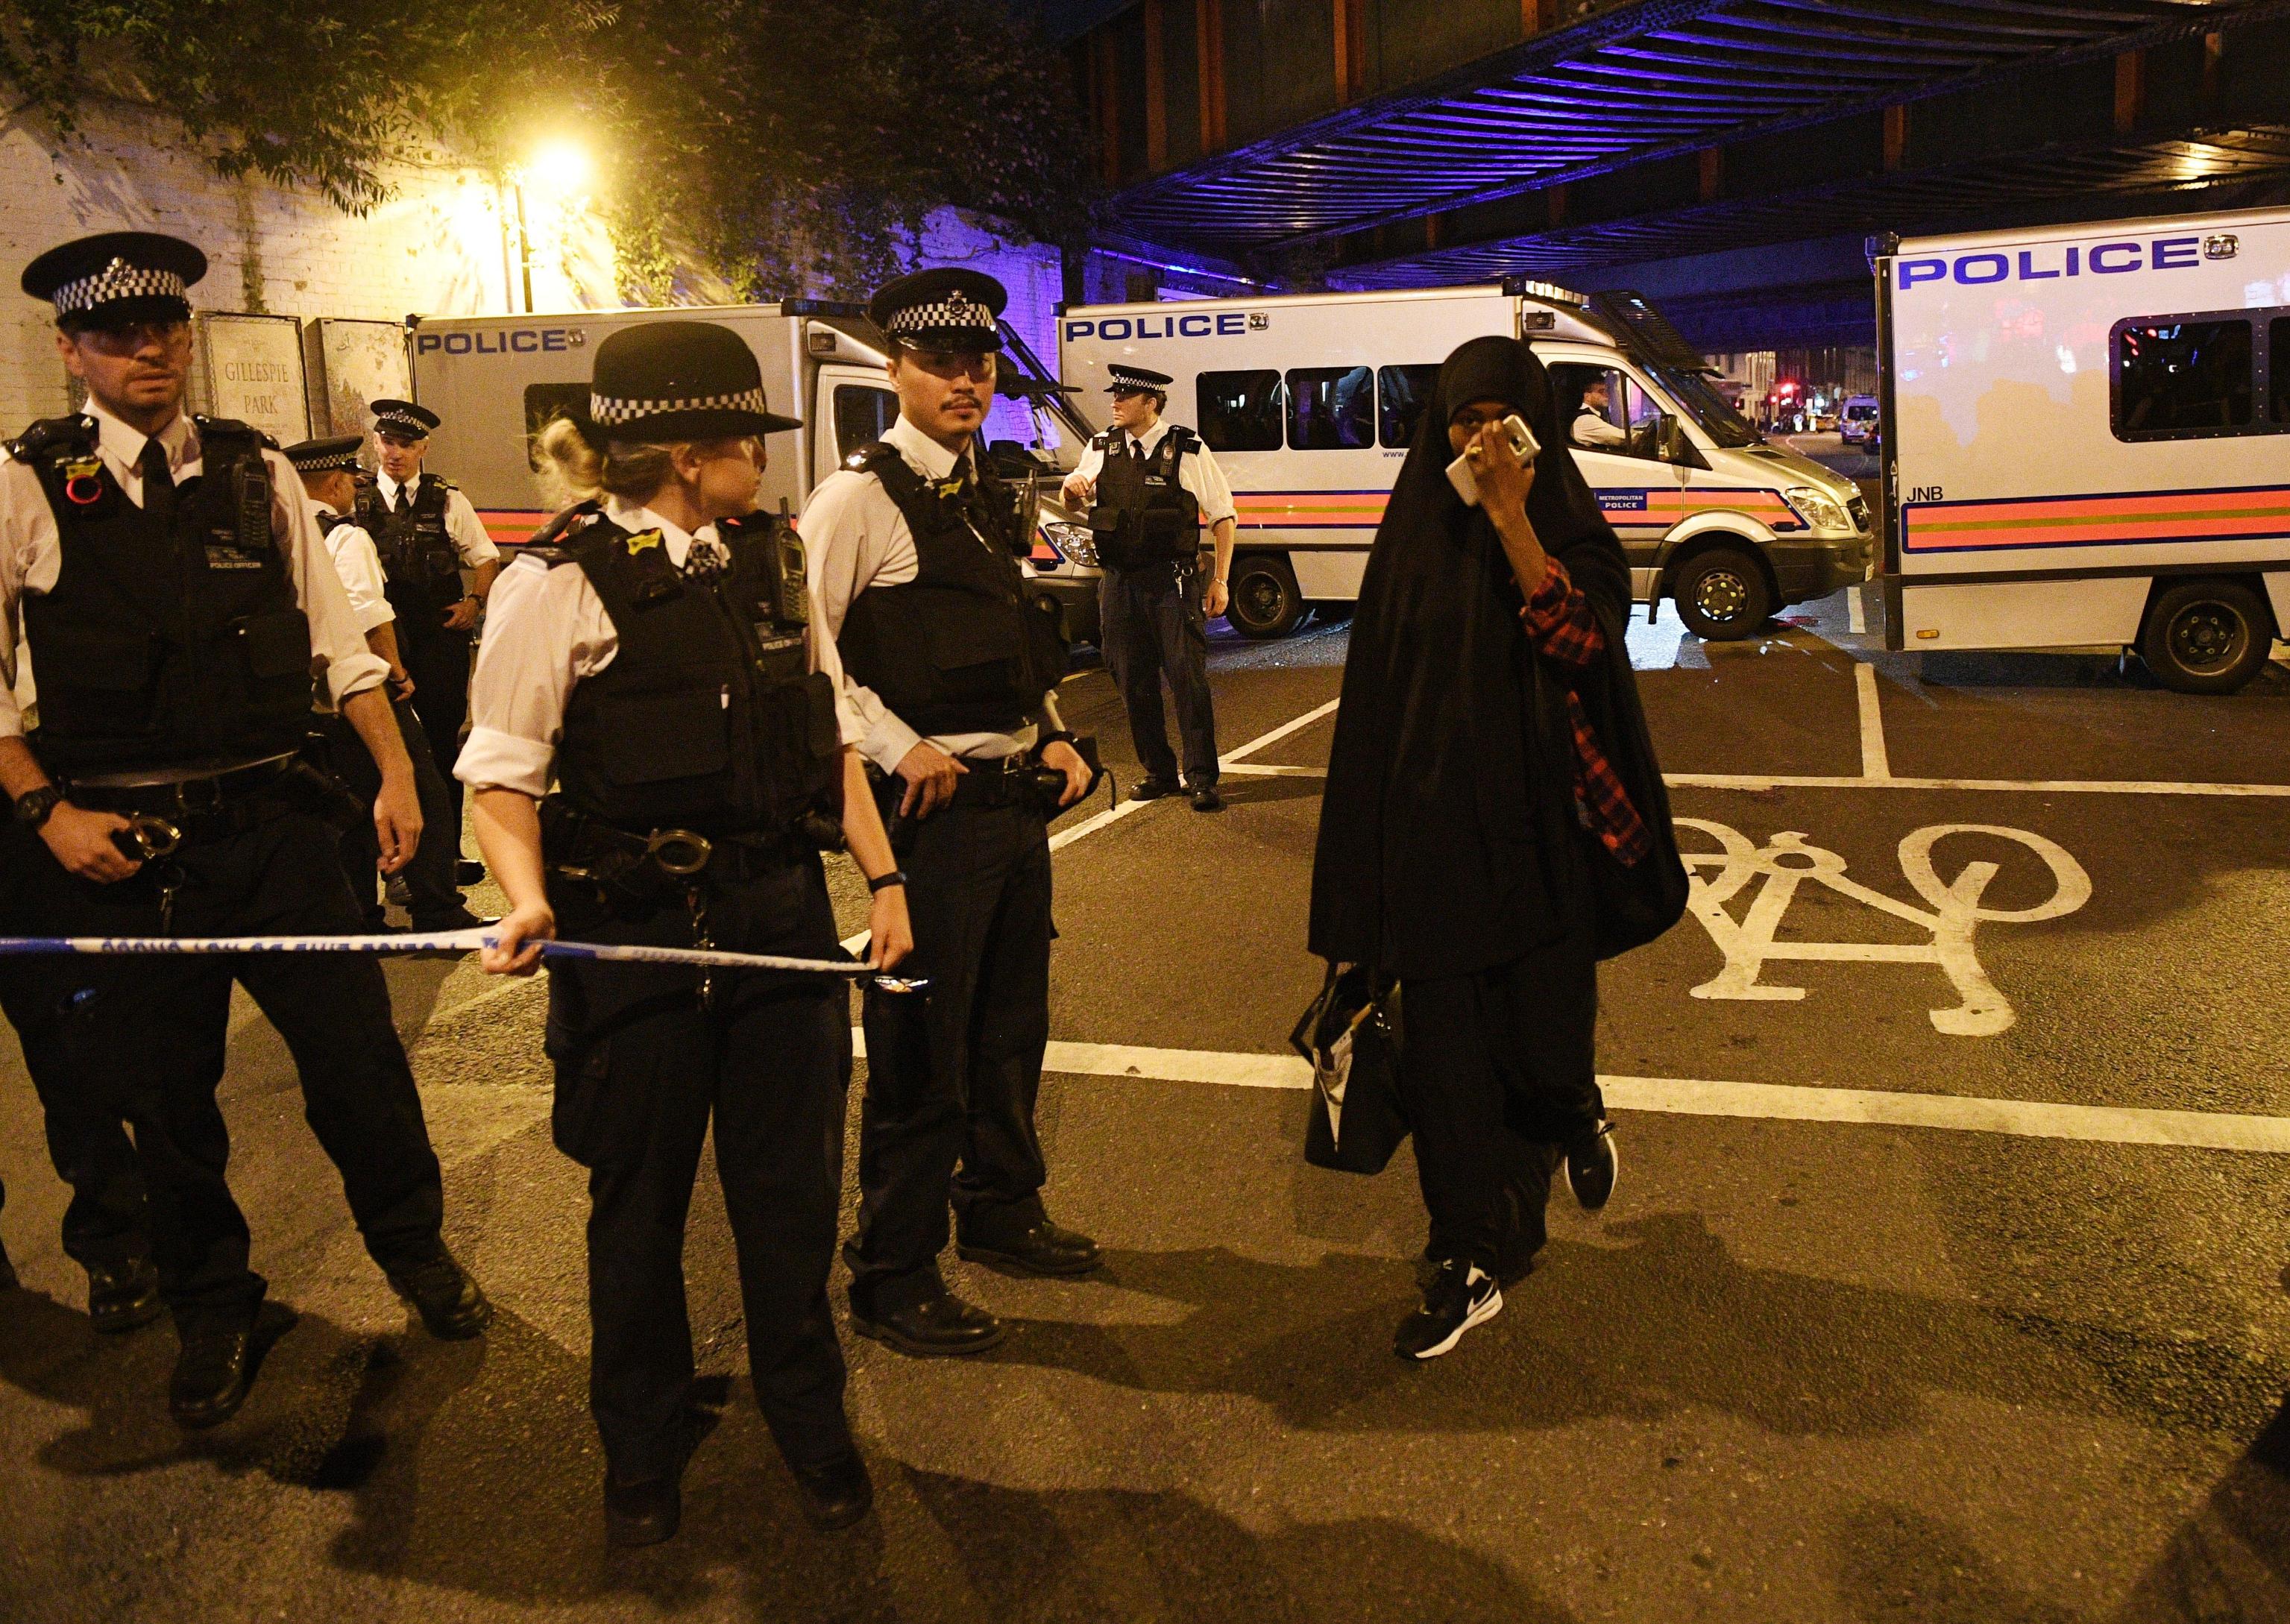 Van hits several pedestrians near Finsbury Park mosque in north London